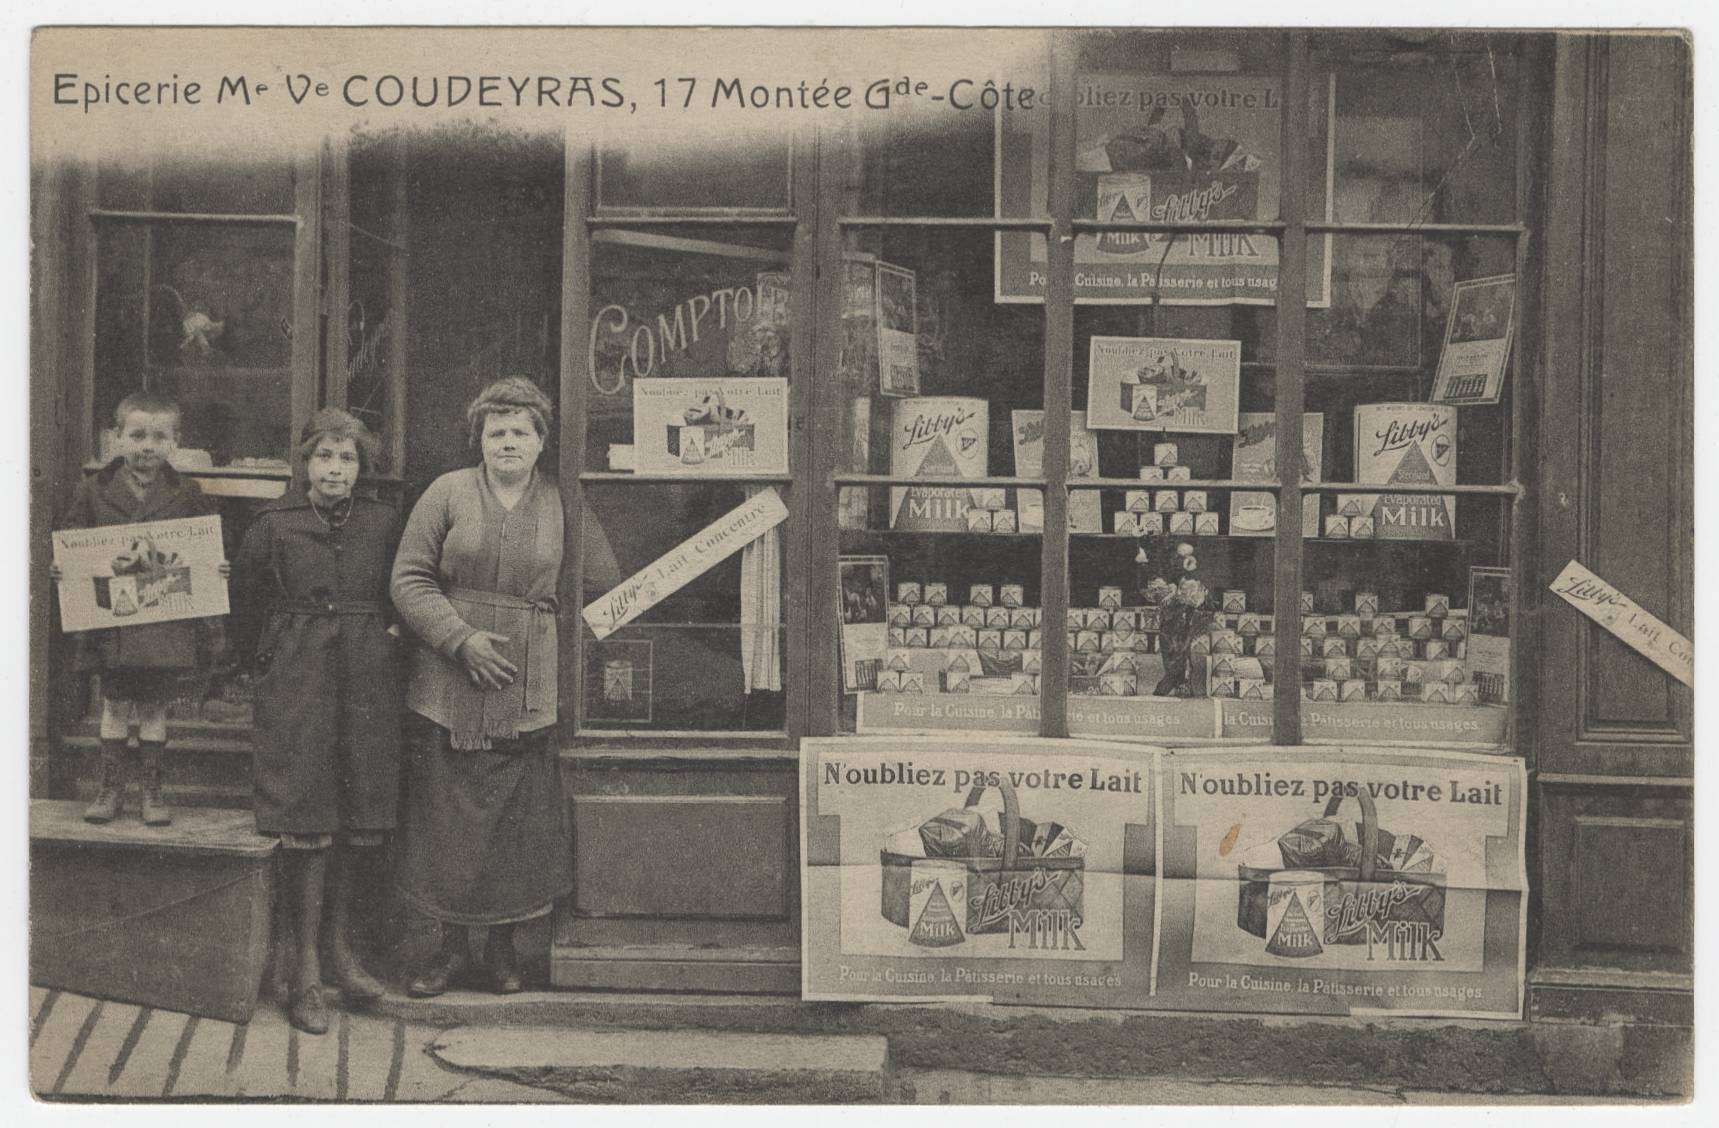 Épicerie Madame Vve Coudeyras : carte postale NB (vers 1910, cote : 4FI/4122)